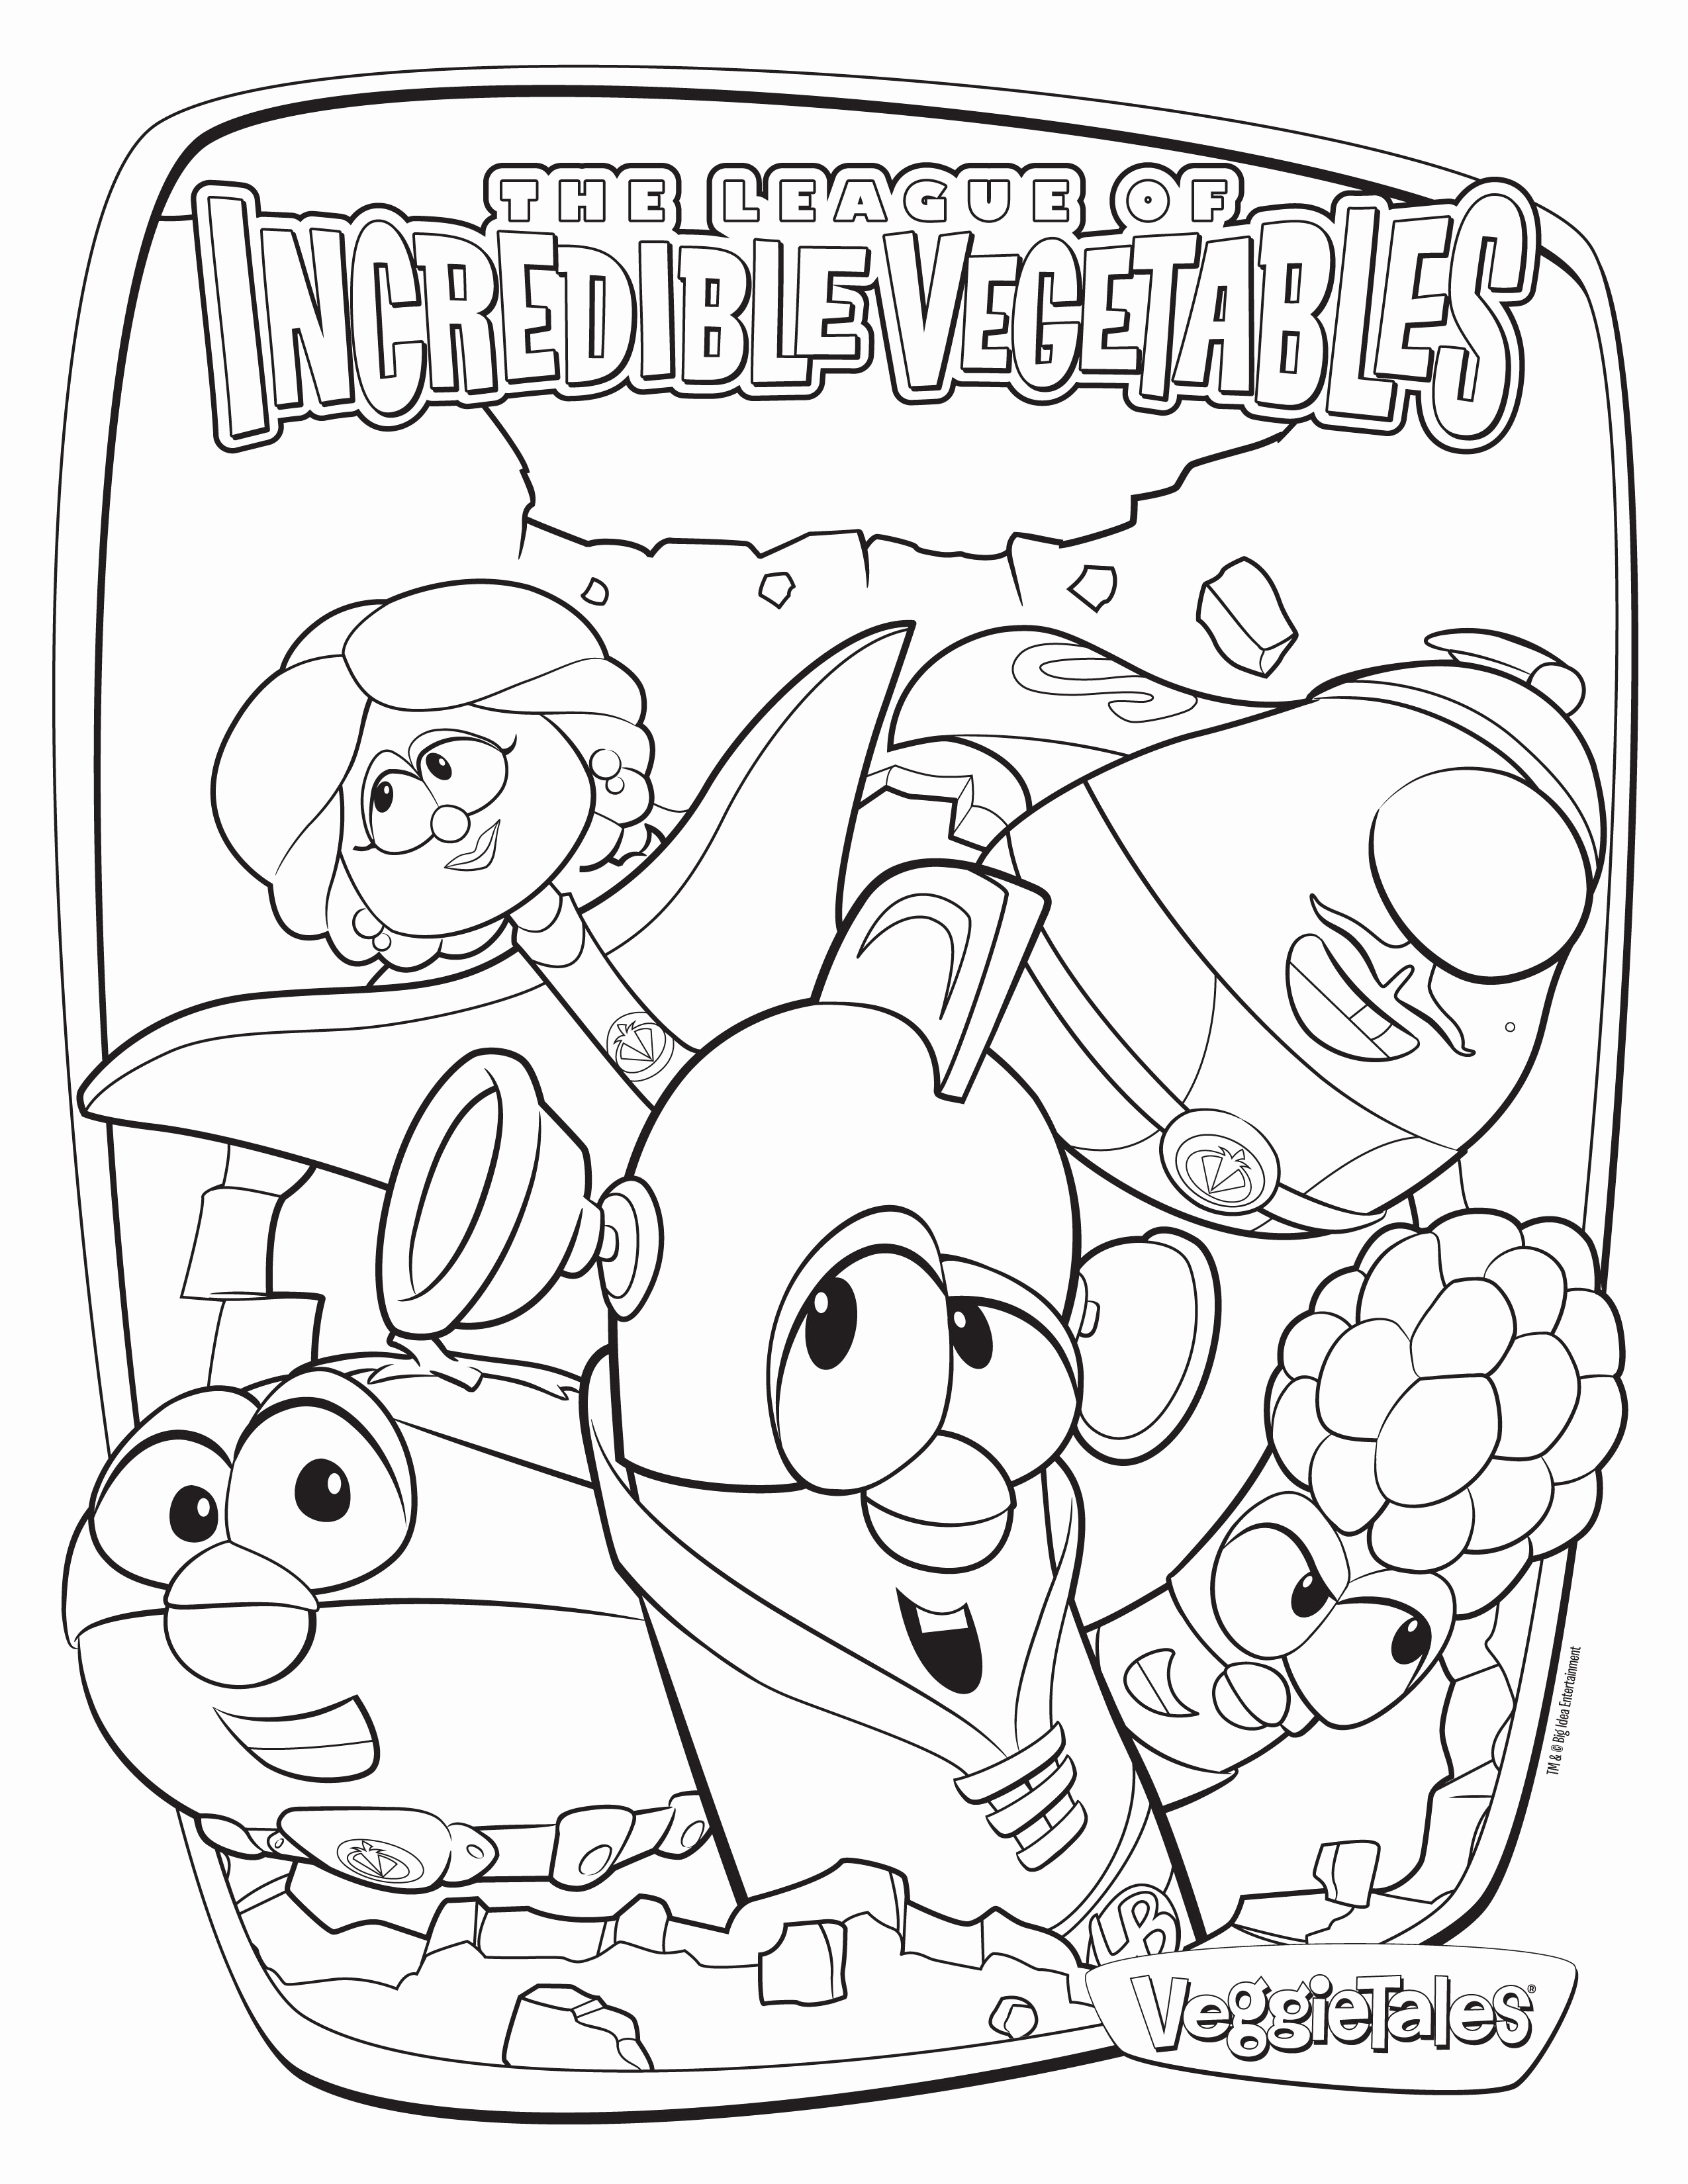 Vegetables Coloring Pages For Kindergarten at GetDrawings ...